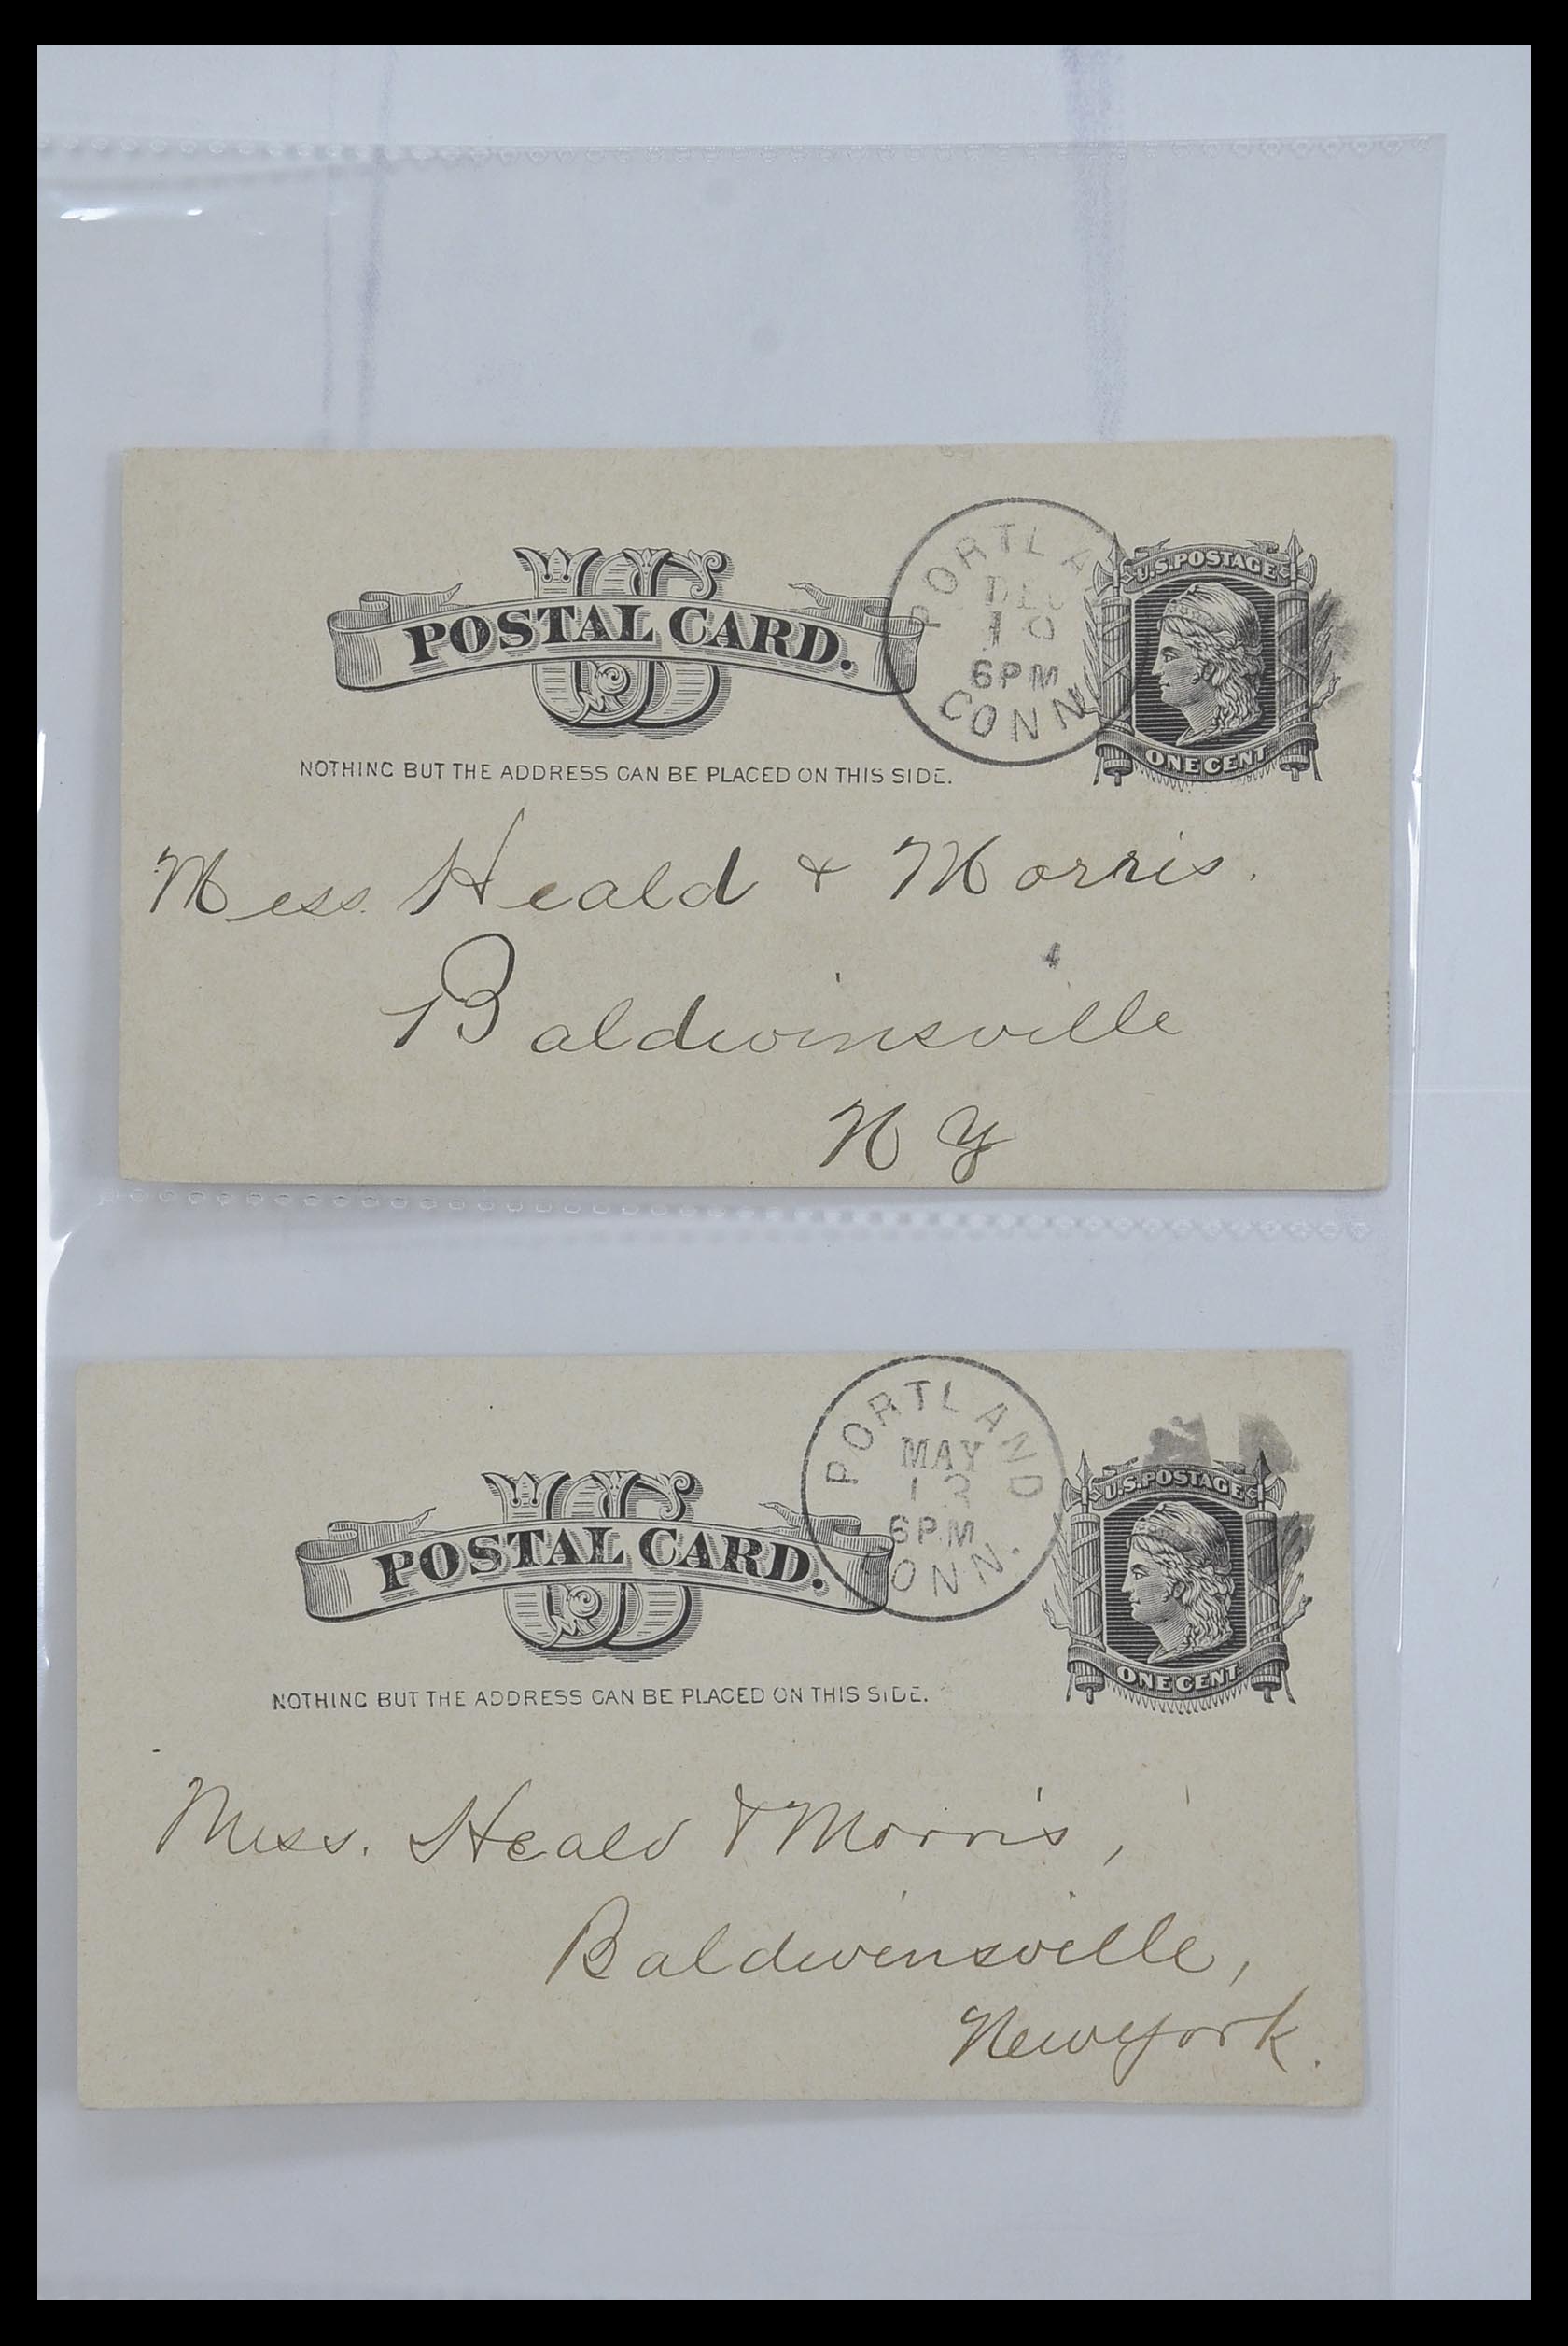 33501 021 - Stamp collection 33501 USA postal cards 1880-1920.